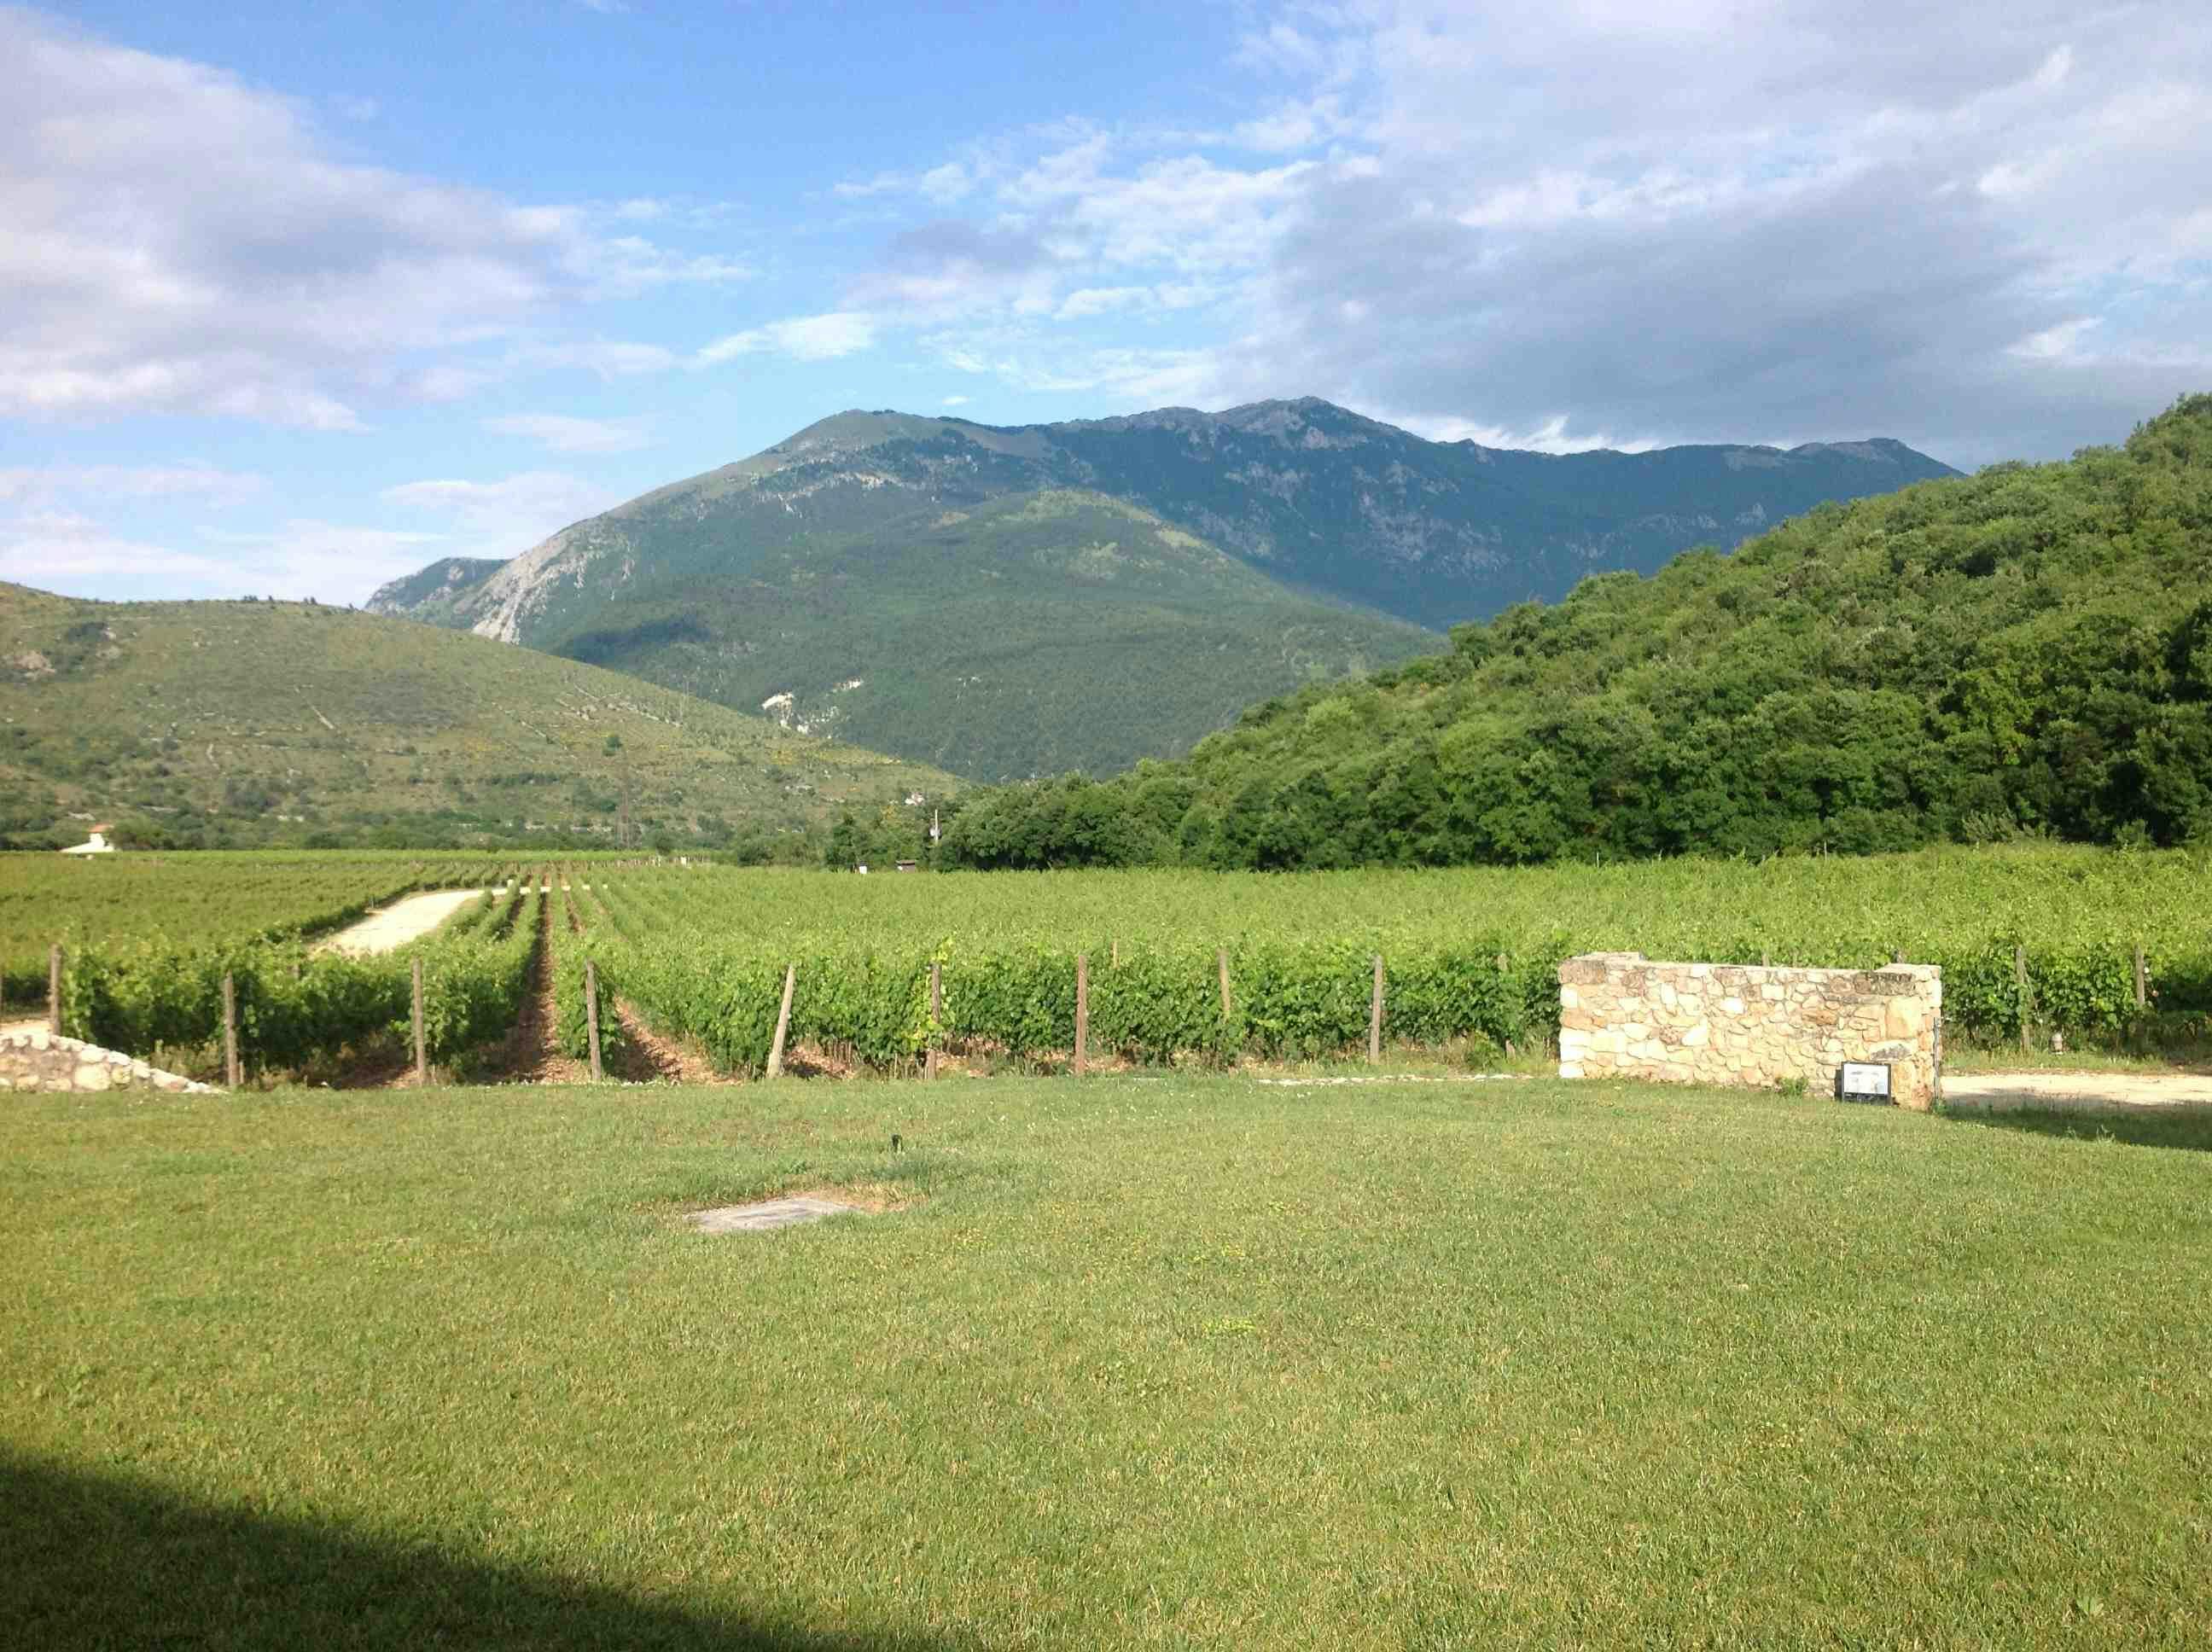 Kvalitetsvin från Abruzzo som inte kostar – Valle Reale - DinVinguide